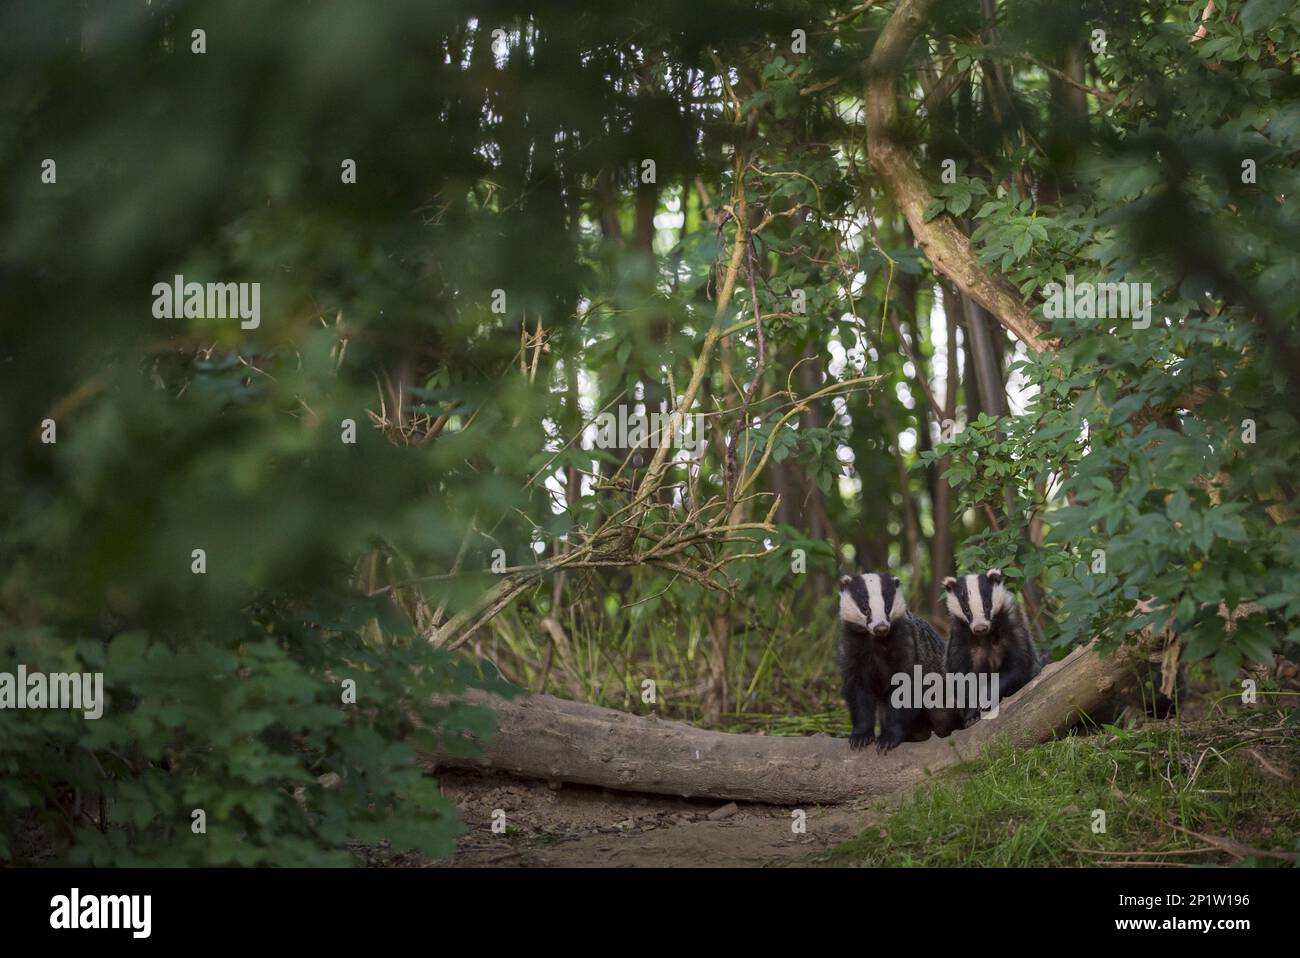 Badger, european badgers (Meles meles), Martens, Predators, Mammals, Animals, Eurasian Badger two adults, standing on fallen branch in coppice Stock Photo